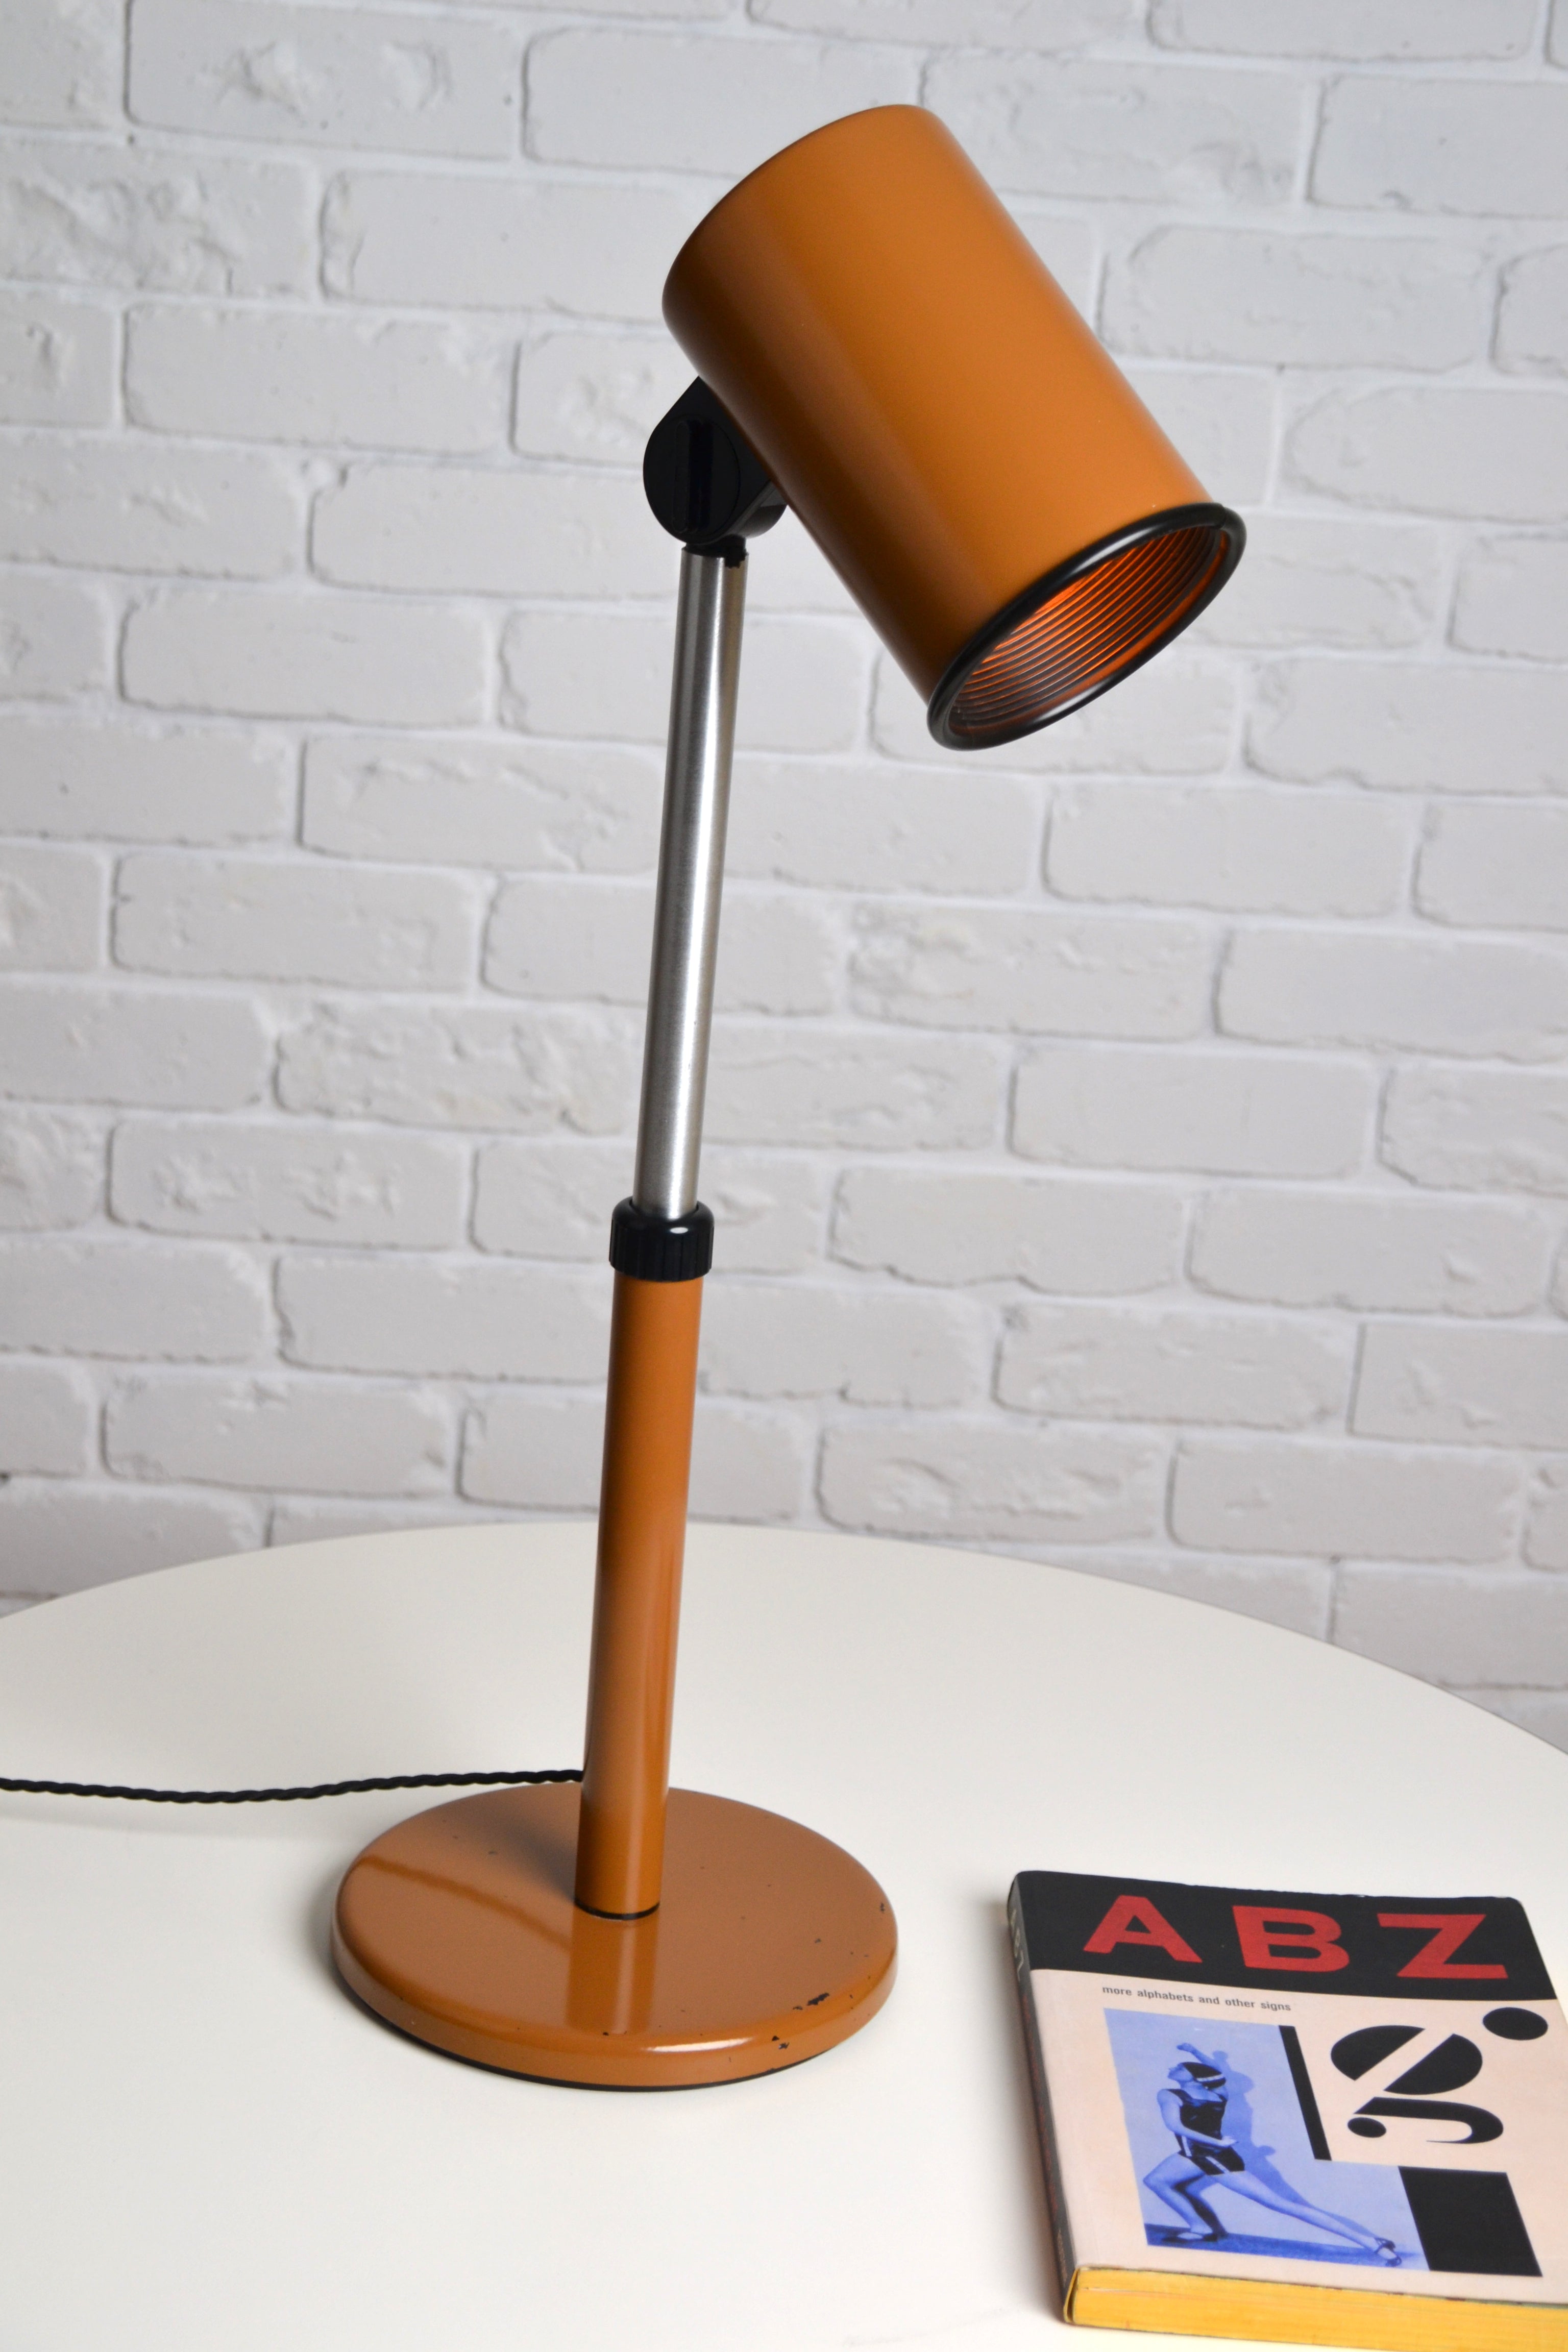 Vintage telescopic table lamp by Studio FPM in Caramel hue